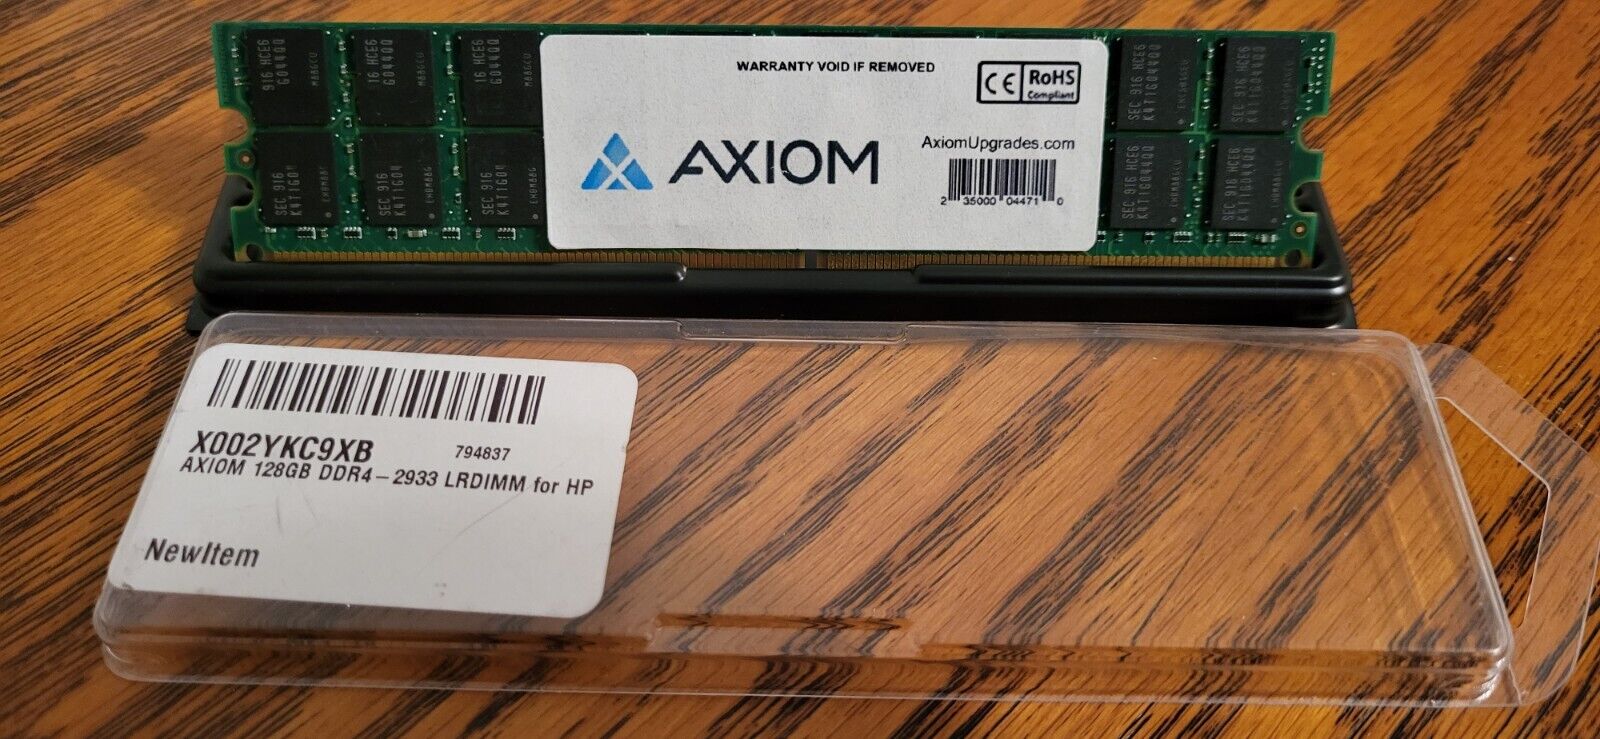 Axiom 128GB DDR4-2933 ECC LRDIMM for HP - P11040-B21 **Server Only**